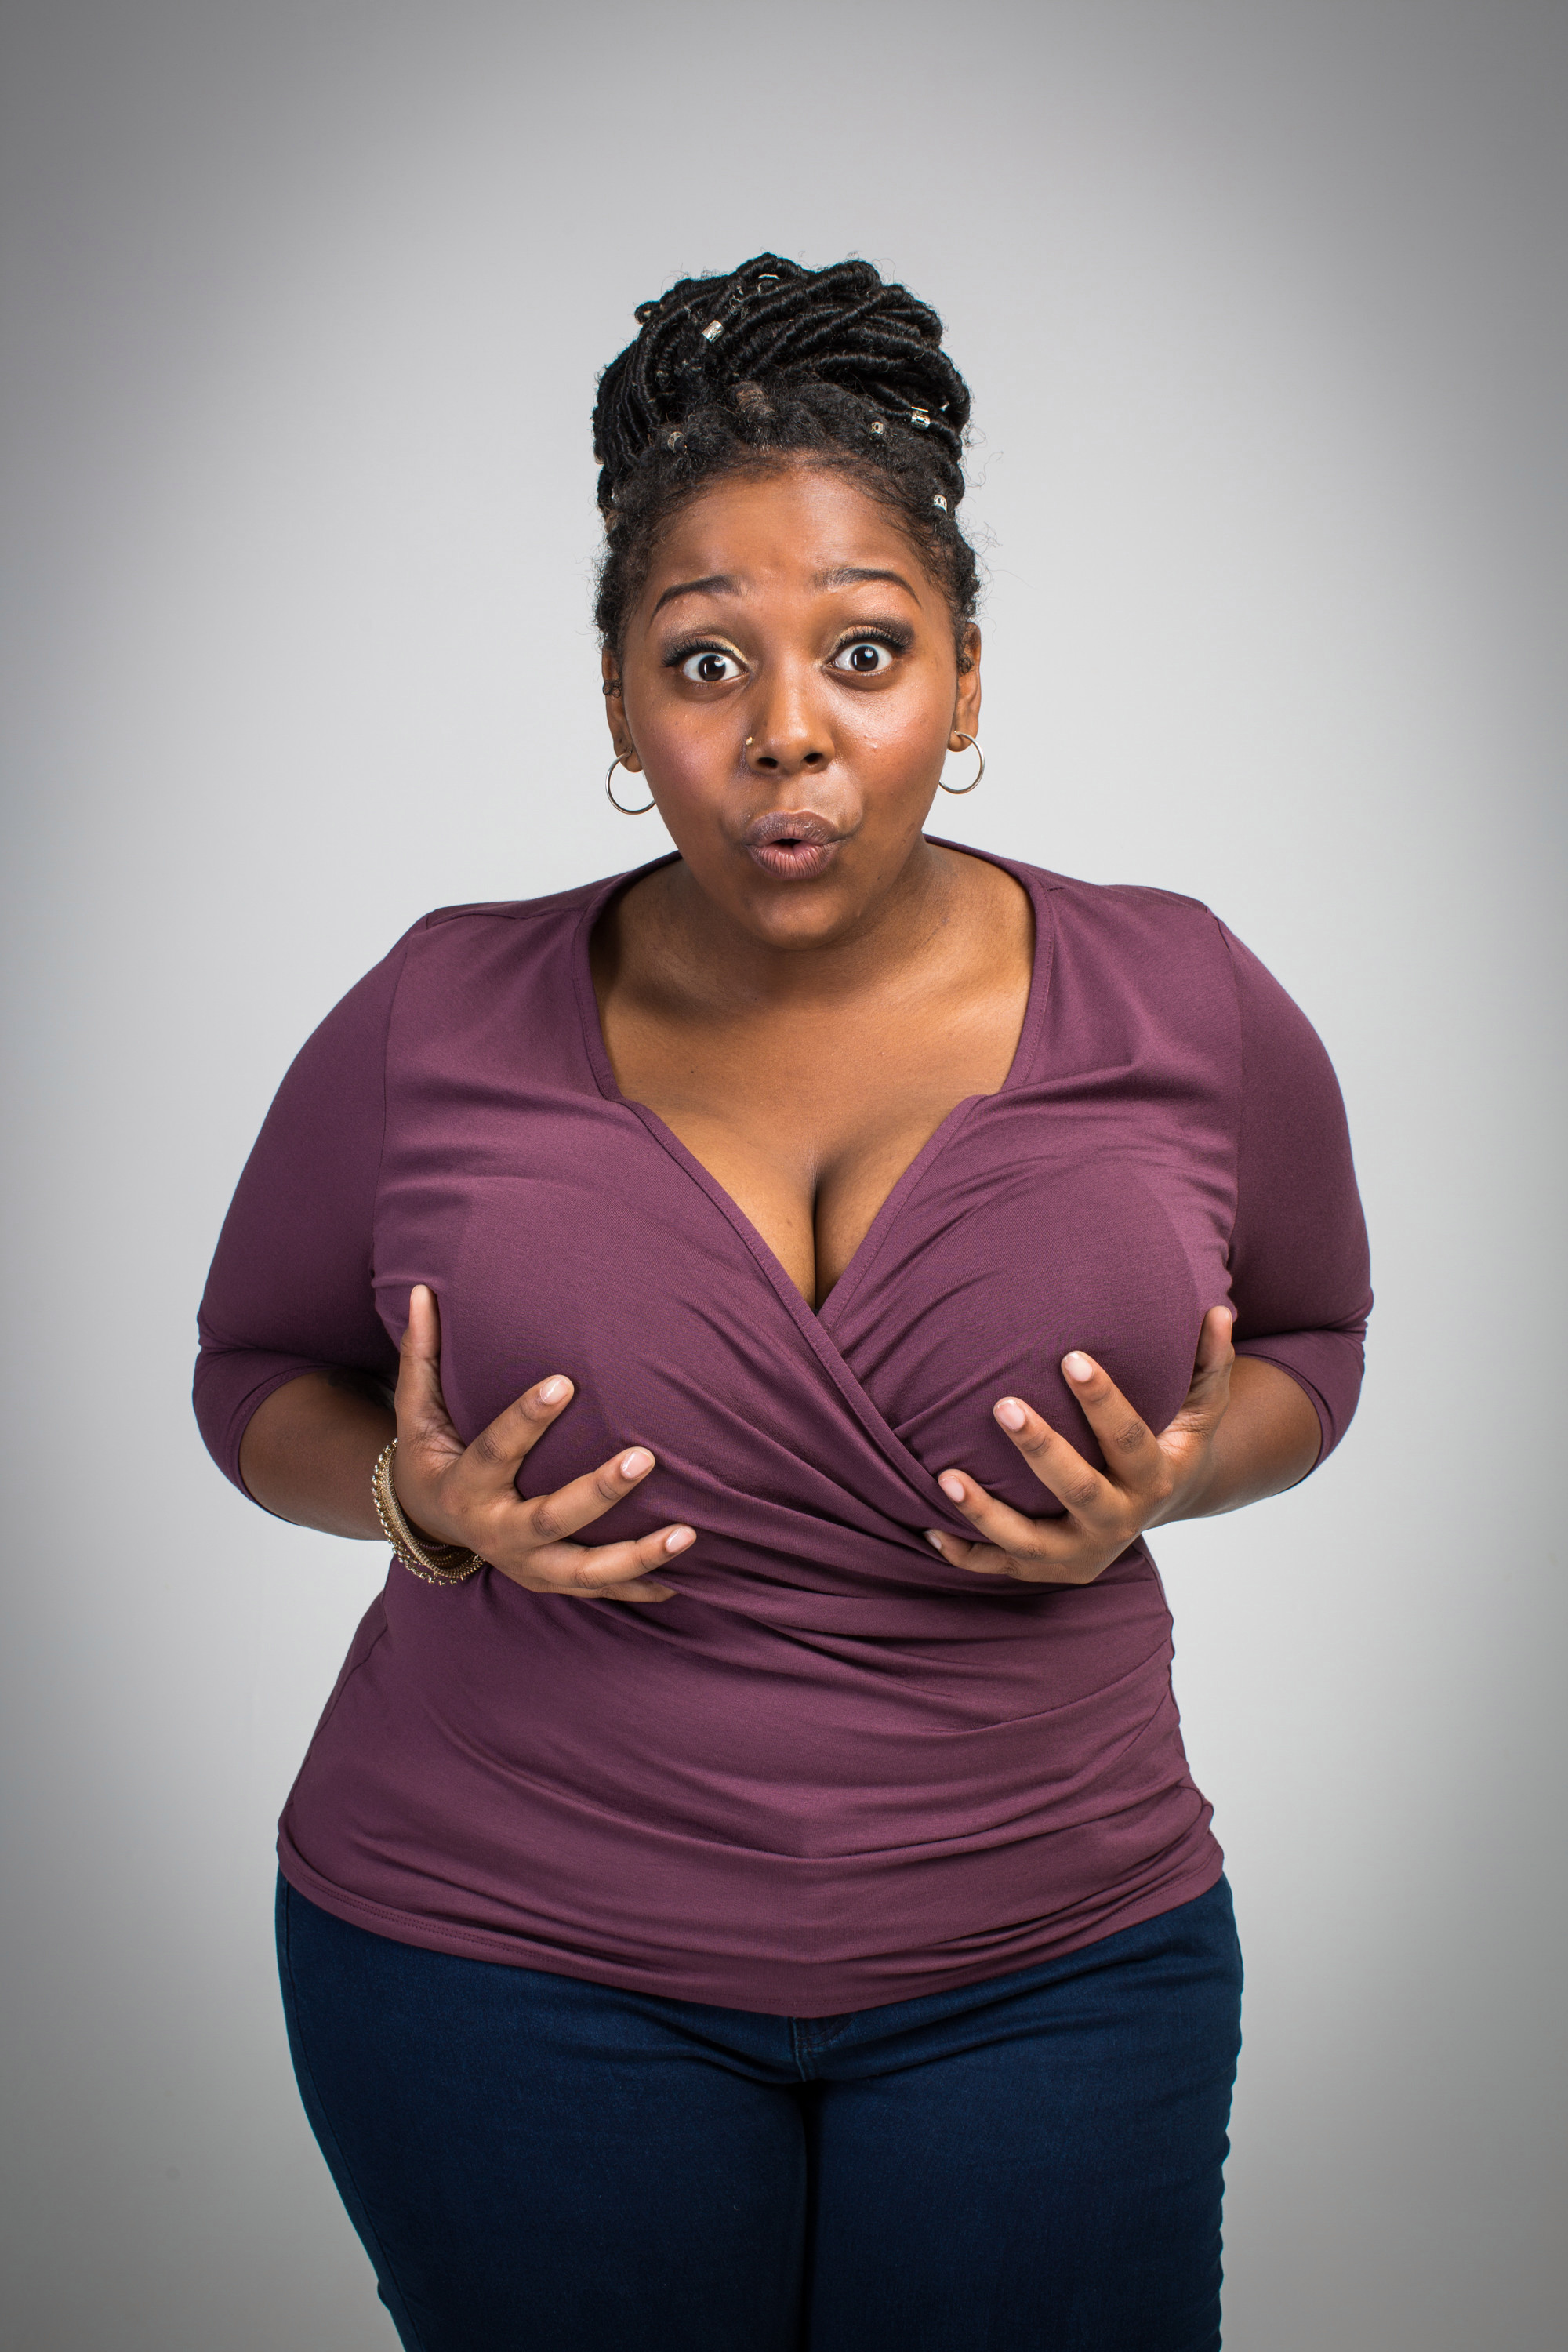 4 struggles of having big breasts